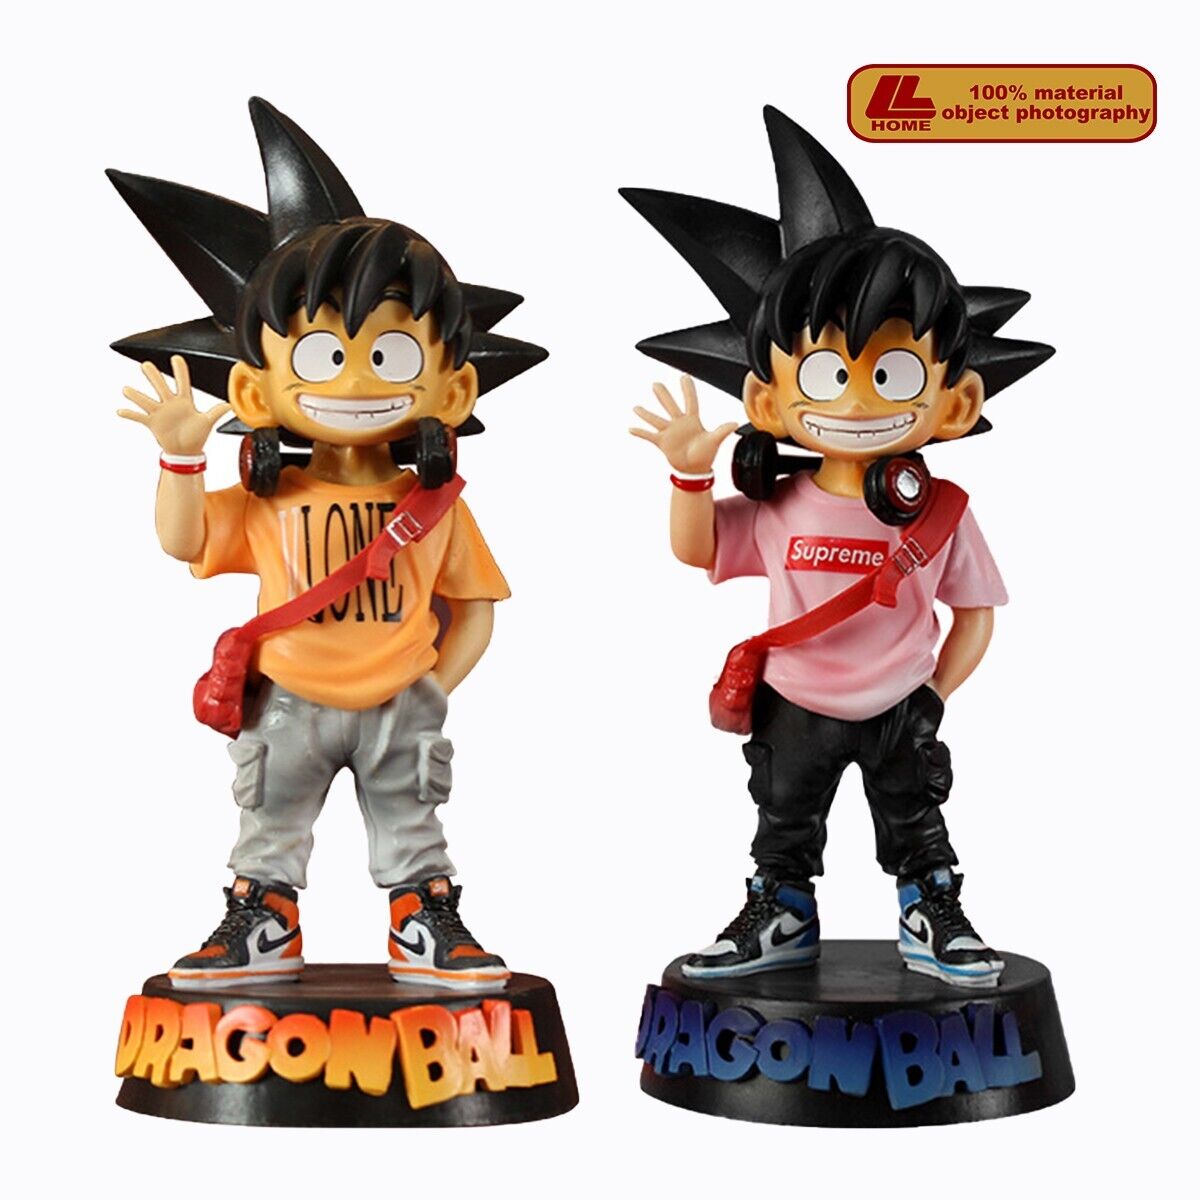 Anime Dragon Ball Z Son Goku wear Hip hop top Smile 2pcs Figure Toy Gift